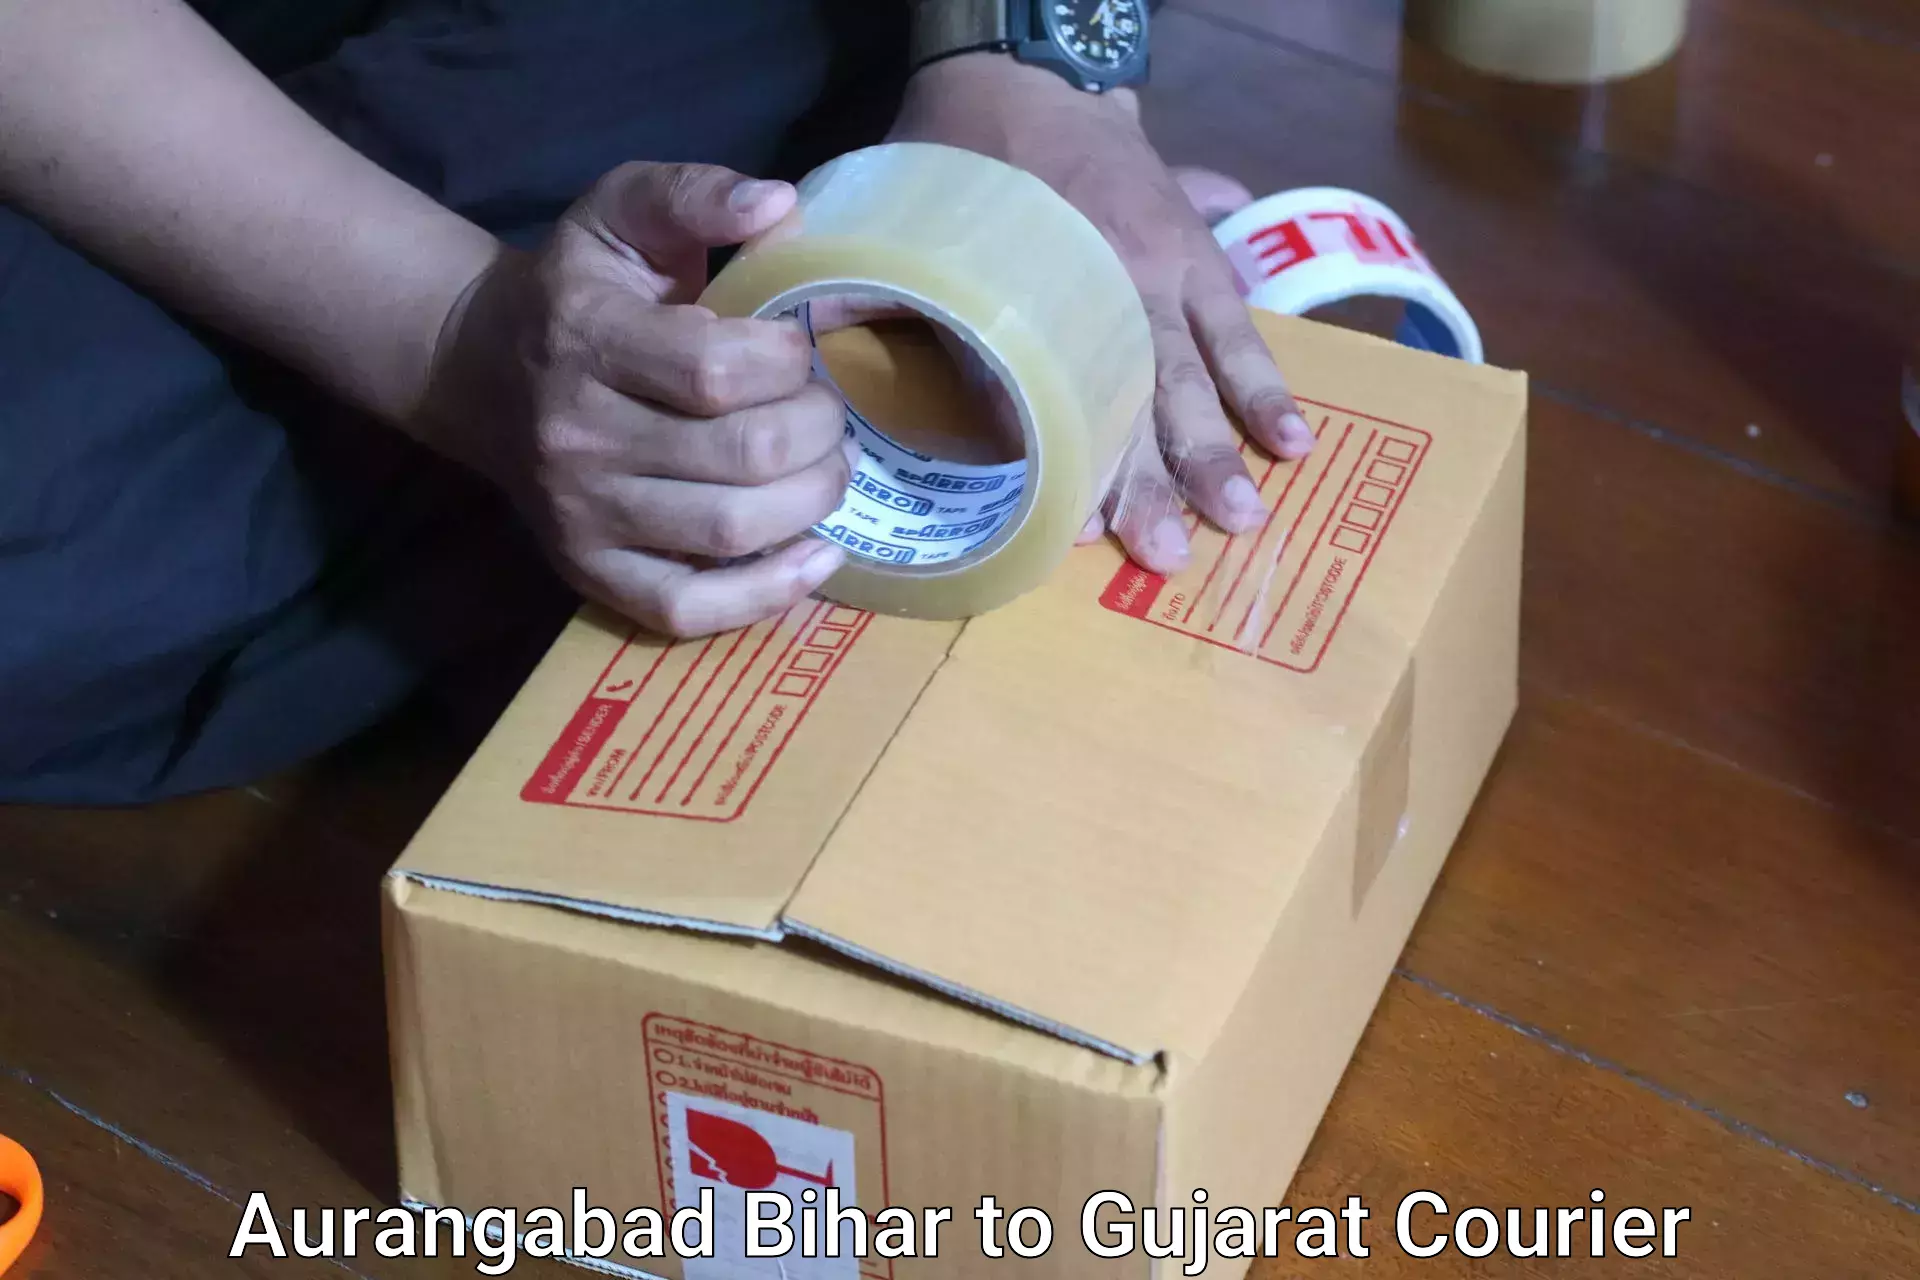 Baggage shipping experts Aurangabad Bihar to Patan Gujarat